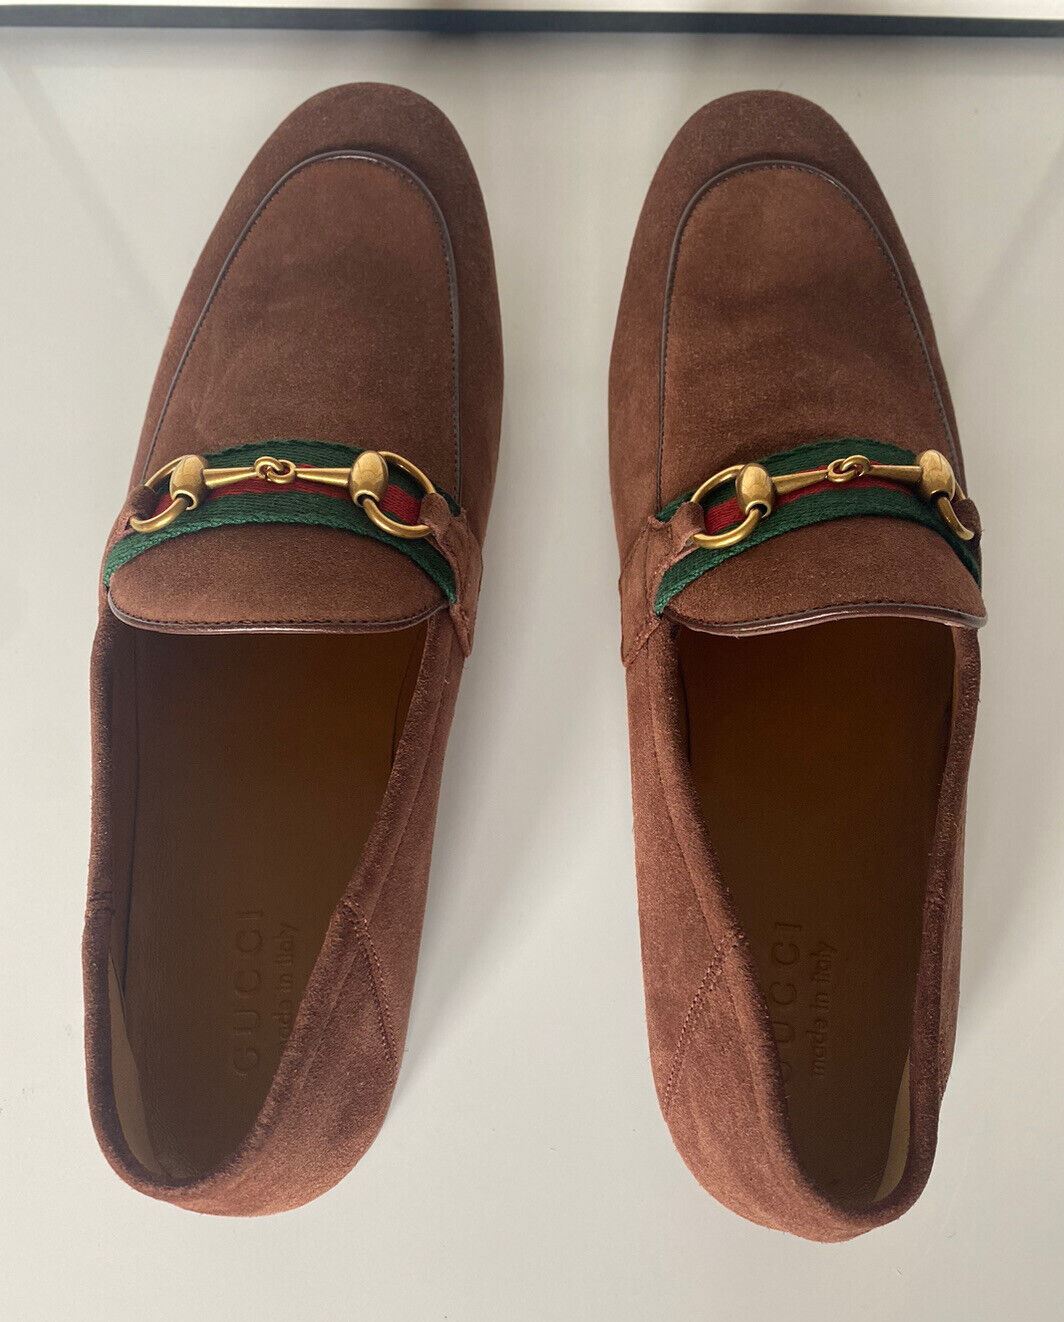 NIB Gucci Men's Horsebit Suede Web Moccasin Shoes Brown 9.5 US (Gucci 9) 581513